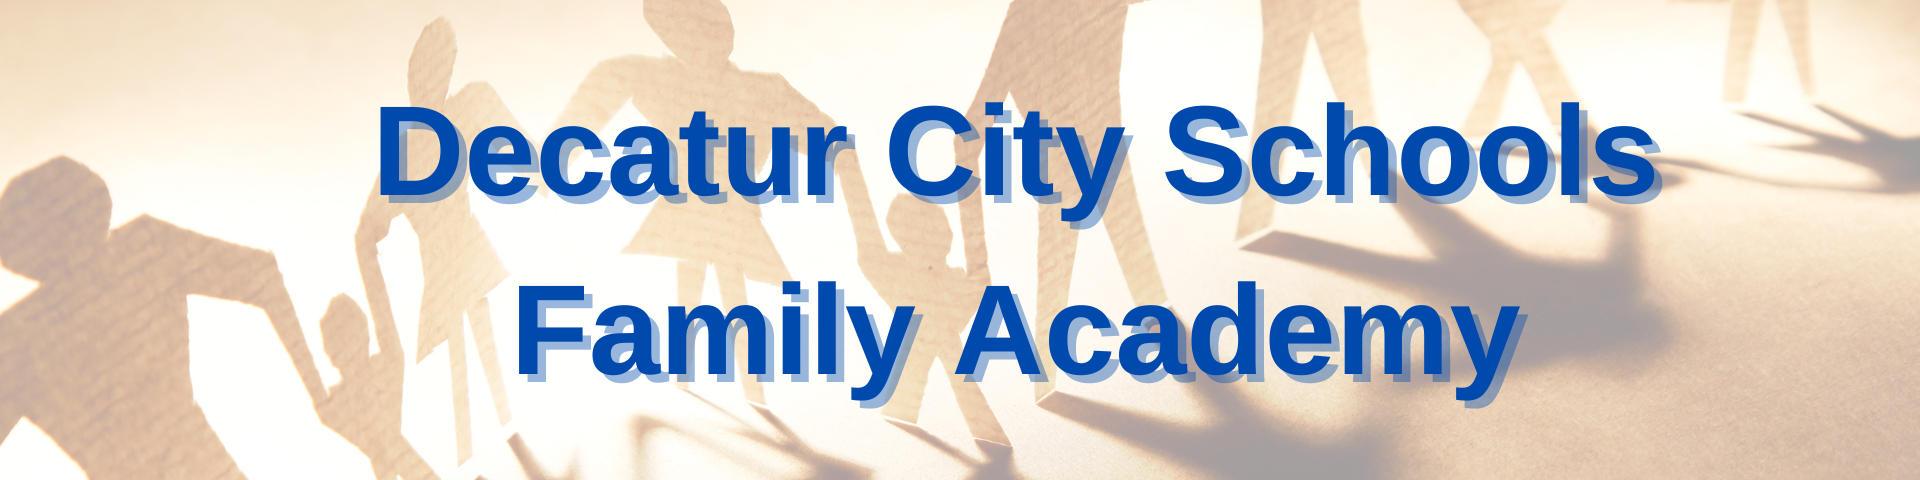 Decatur City Schools Family Academy Header